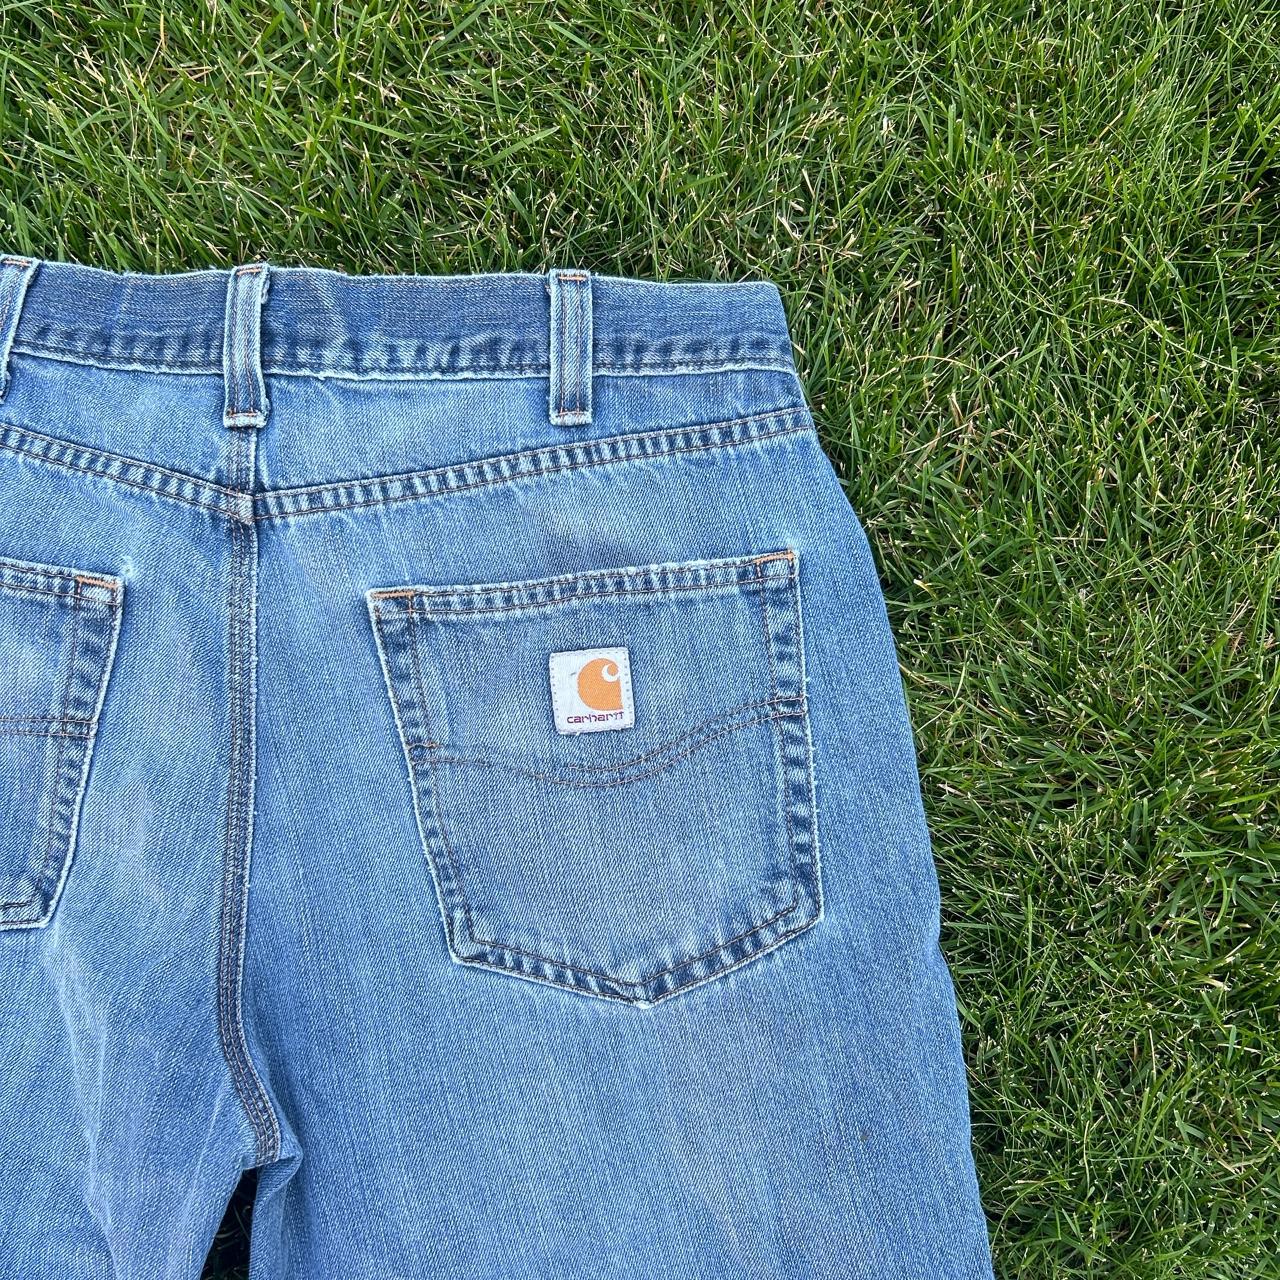 Vintage Carhartt jeans Super dope nice fade /... - Depop